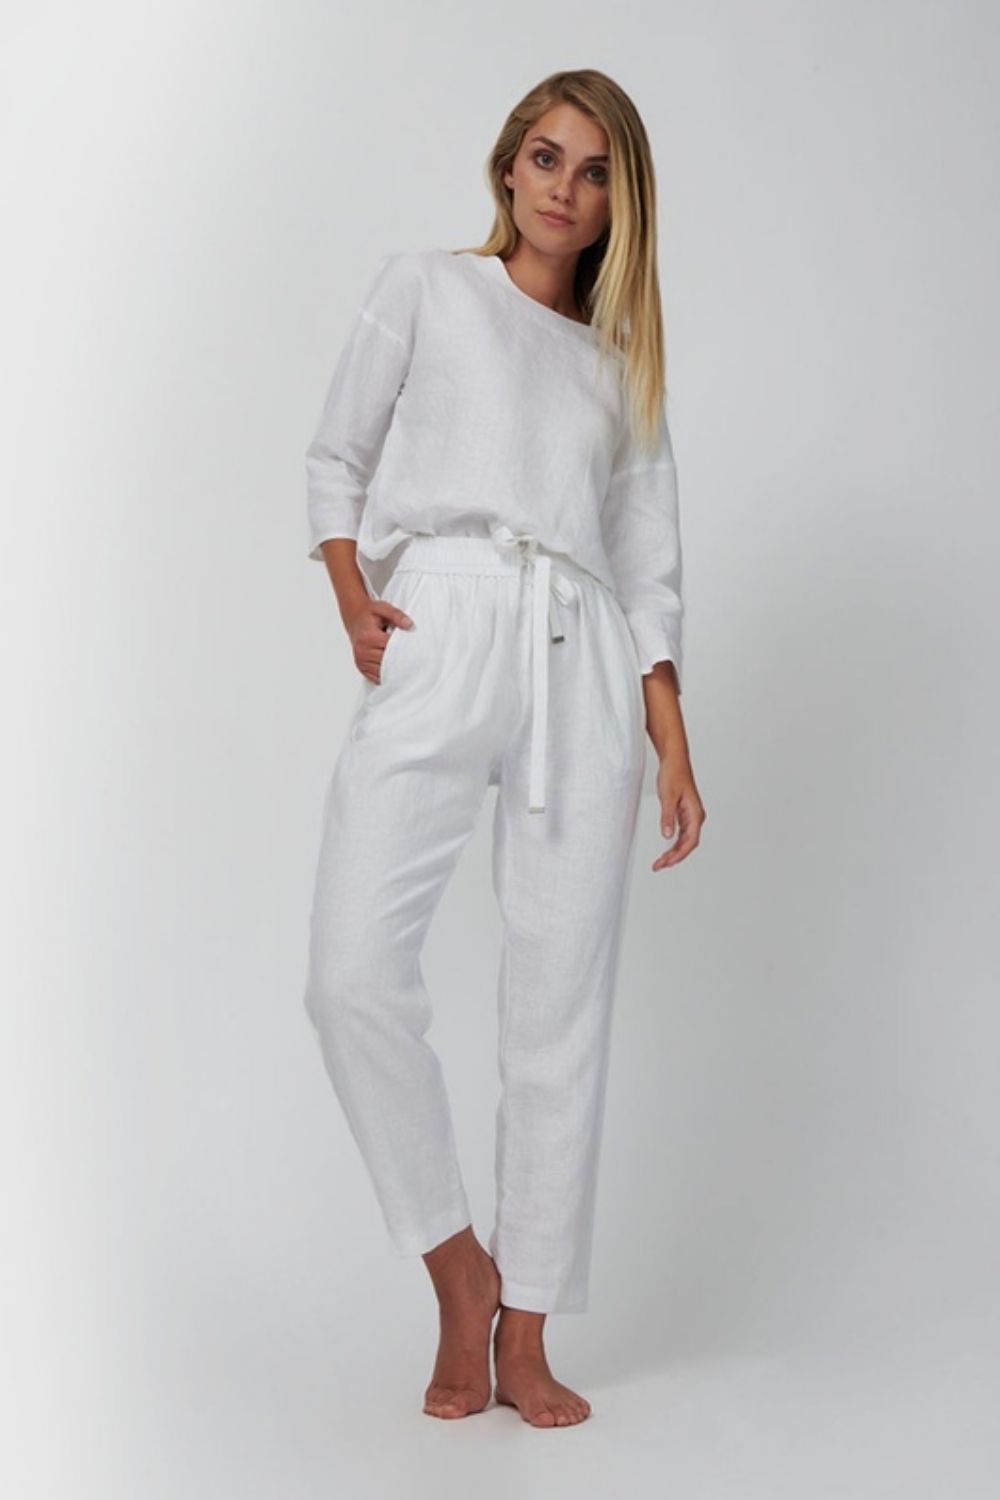 white-blouse-sustainable